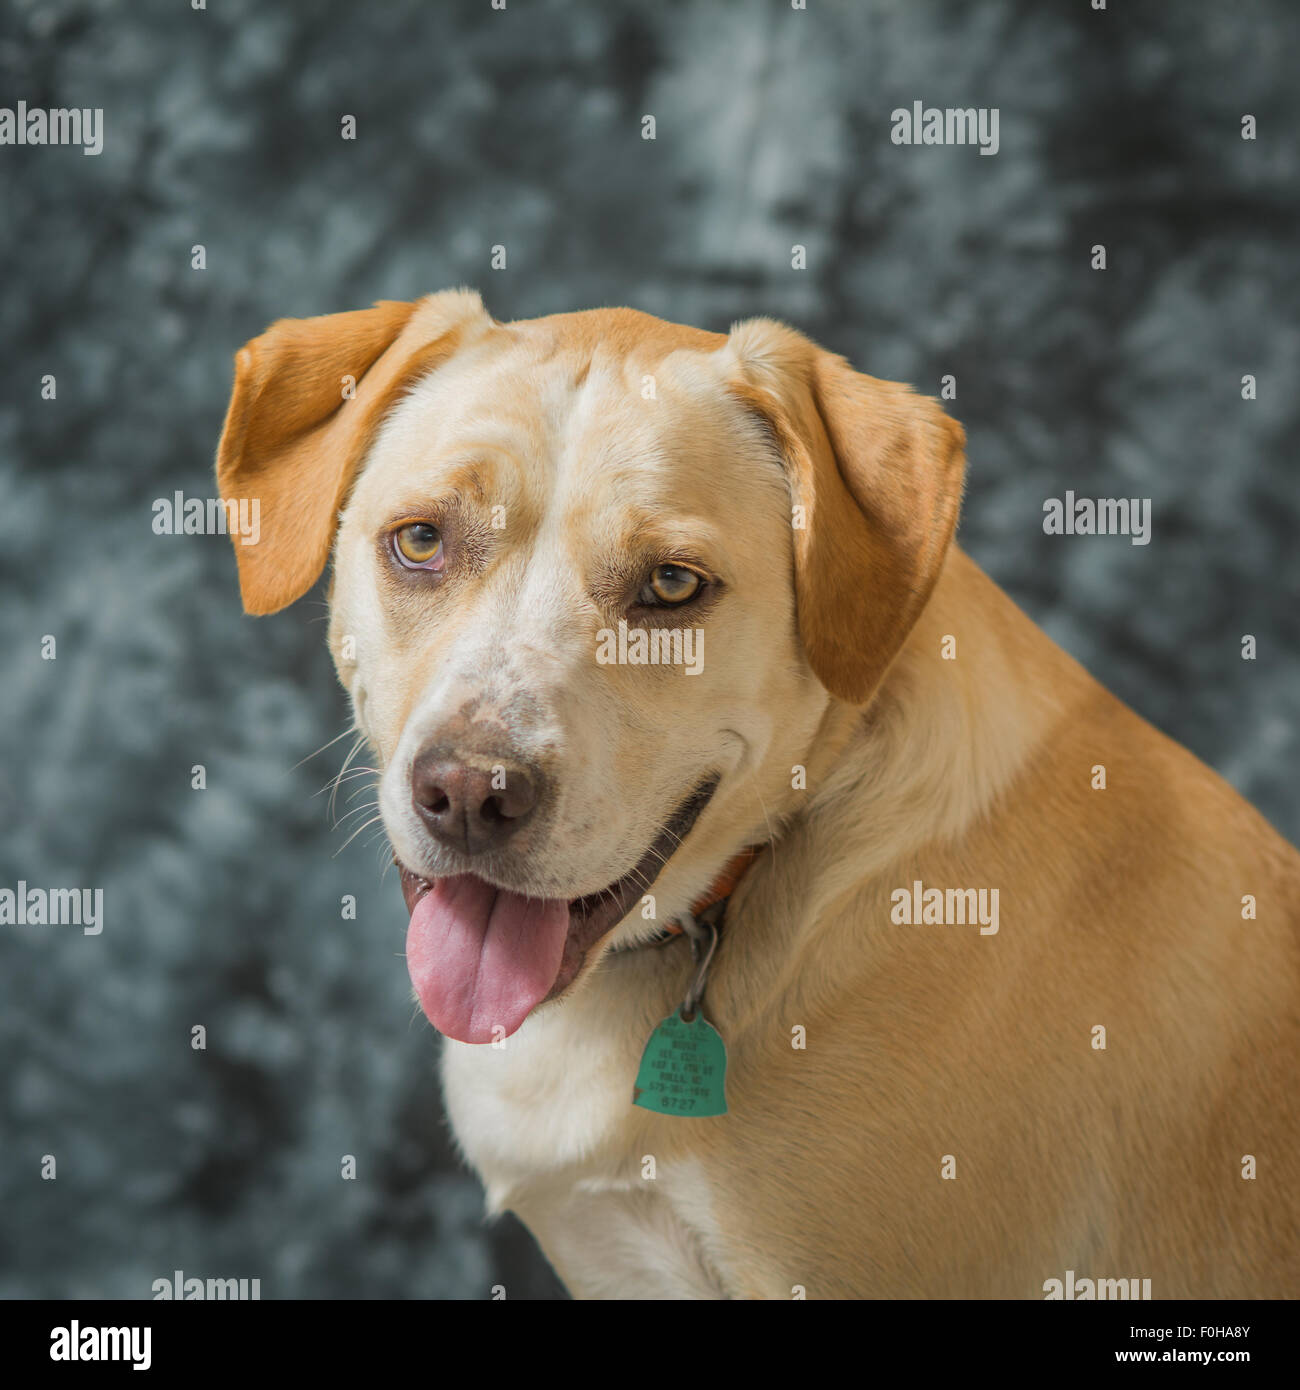 Gelber Hund portrait Stockfotografie - Alamy